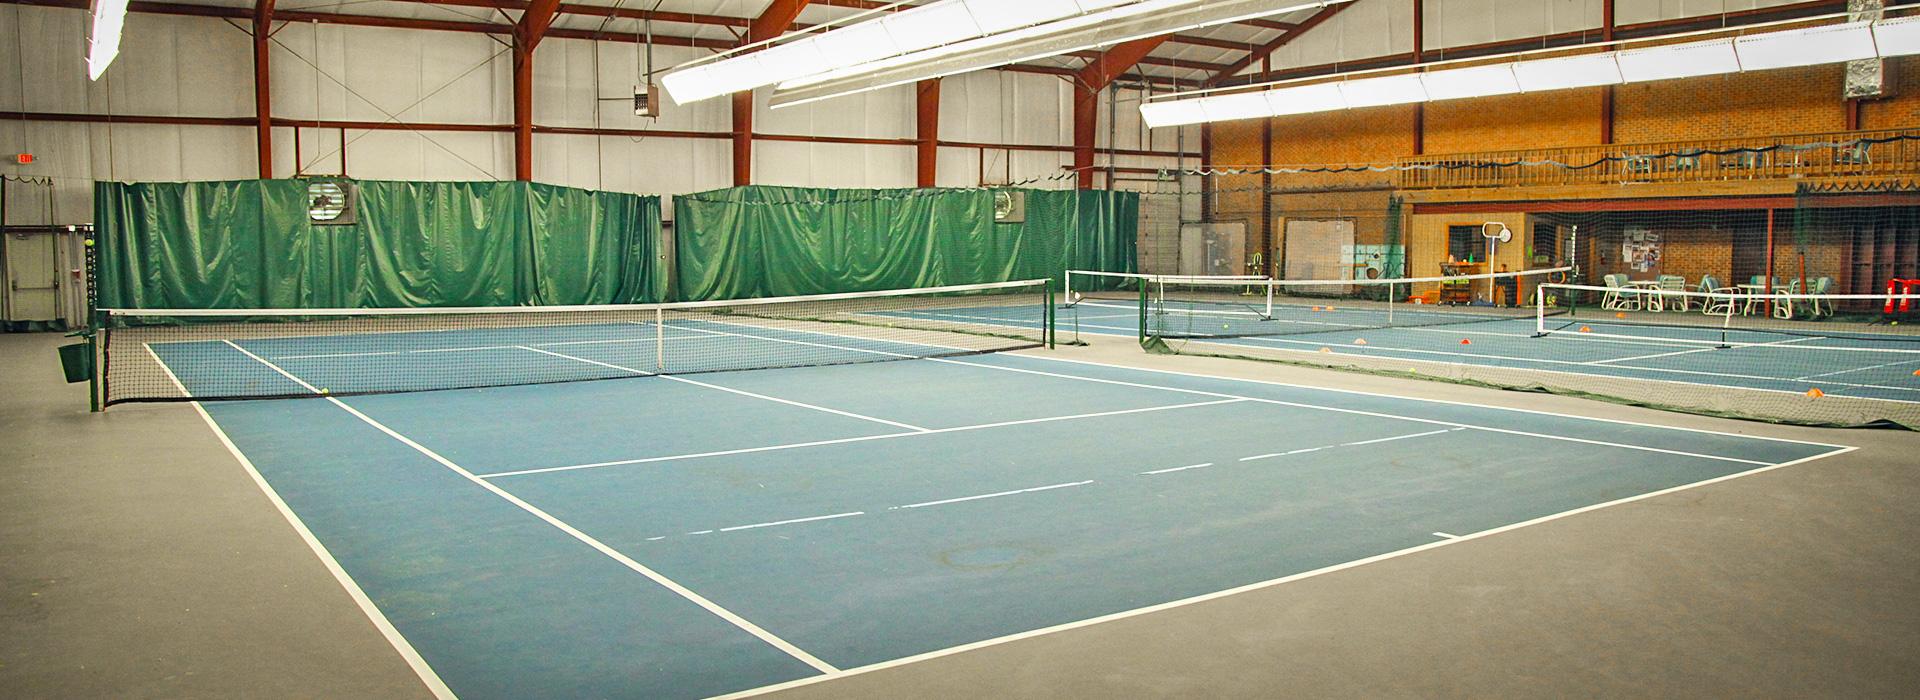 James L. Camp, Jr. Family YMCA tennis courts